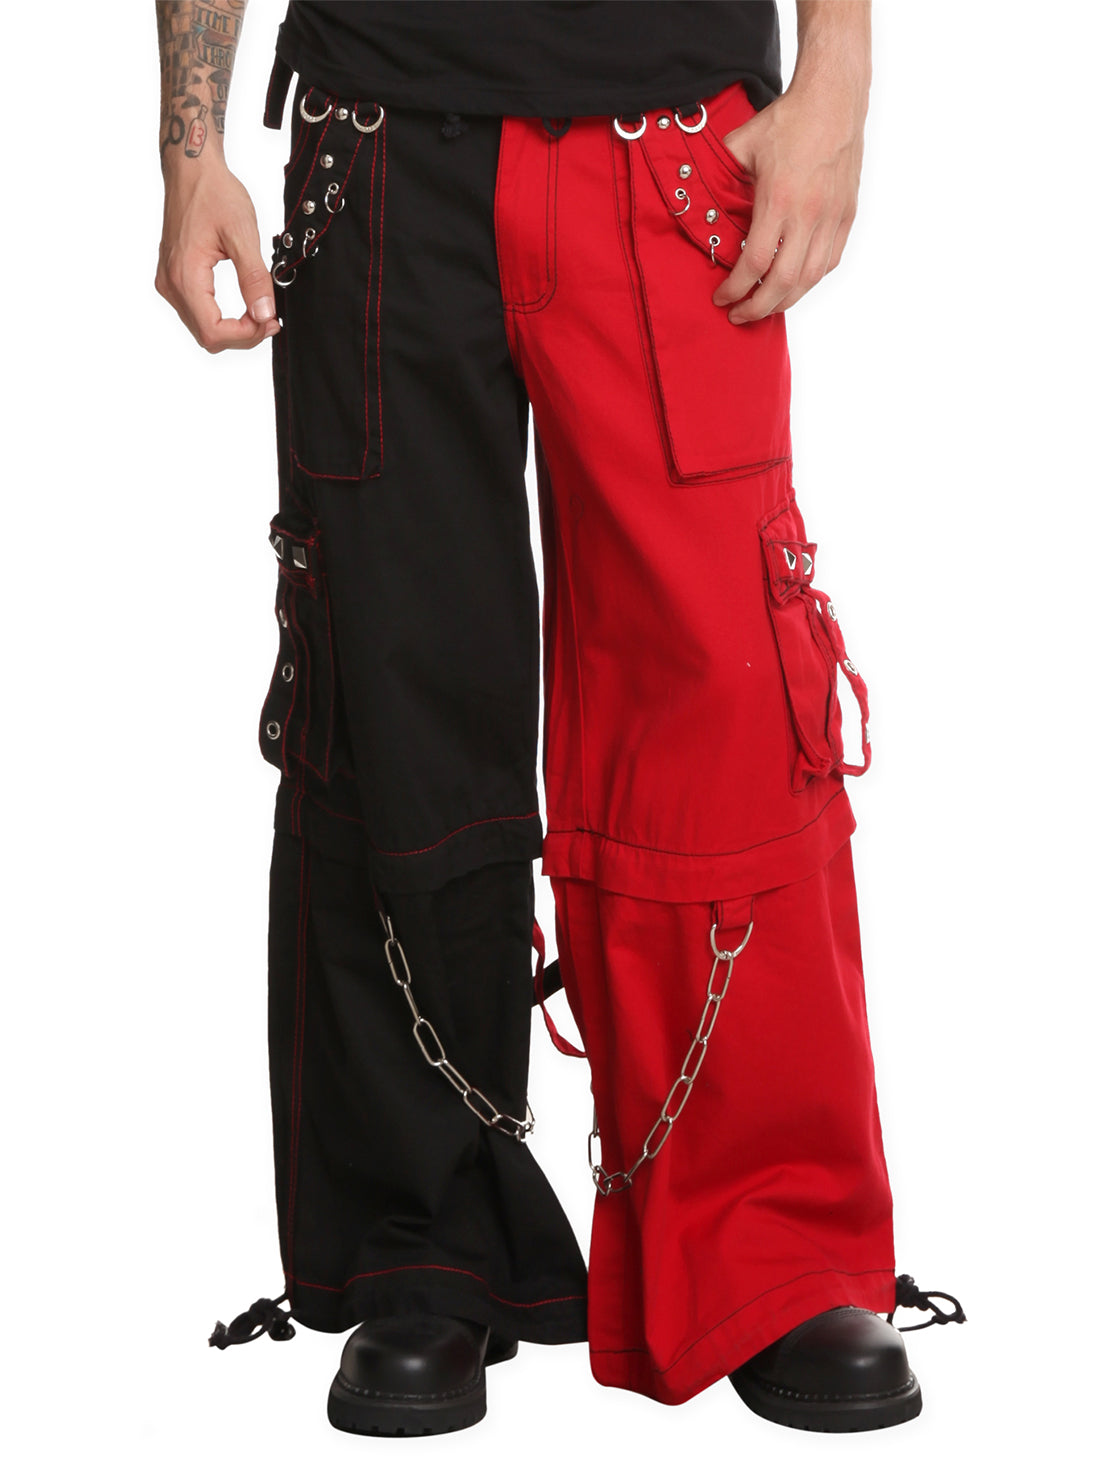 Zara Trafaluc Collection Black with Red Stripe Pants XS | eBay